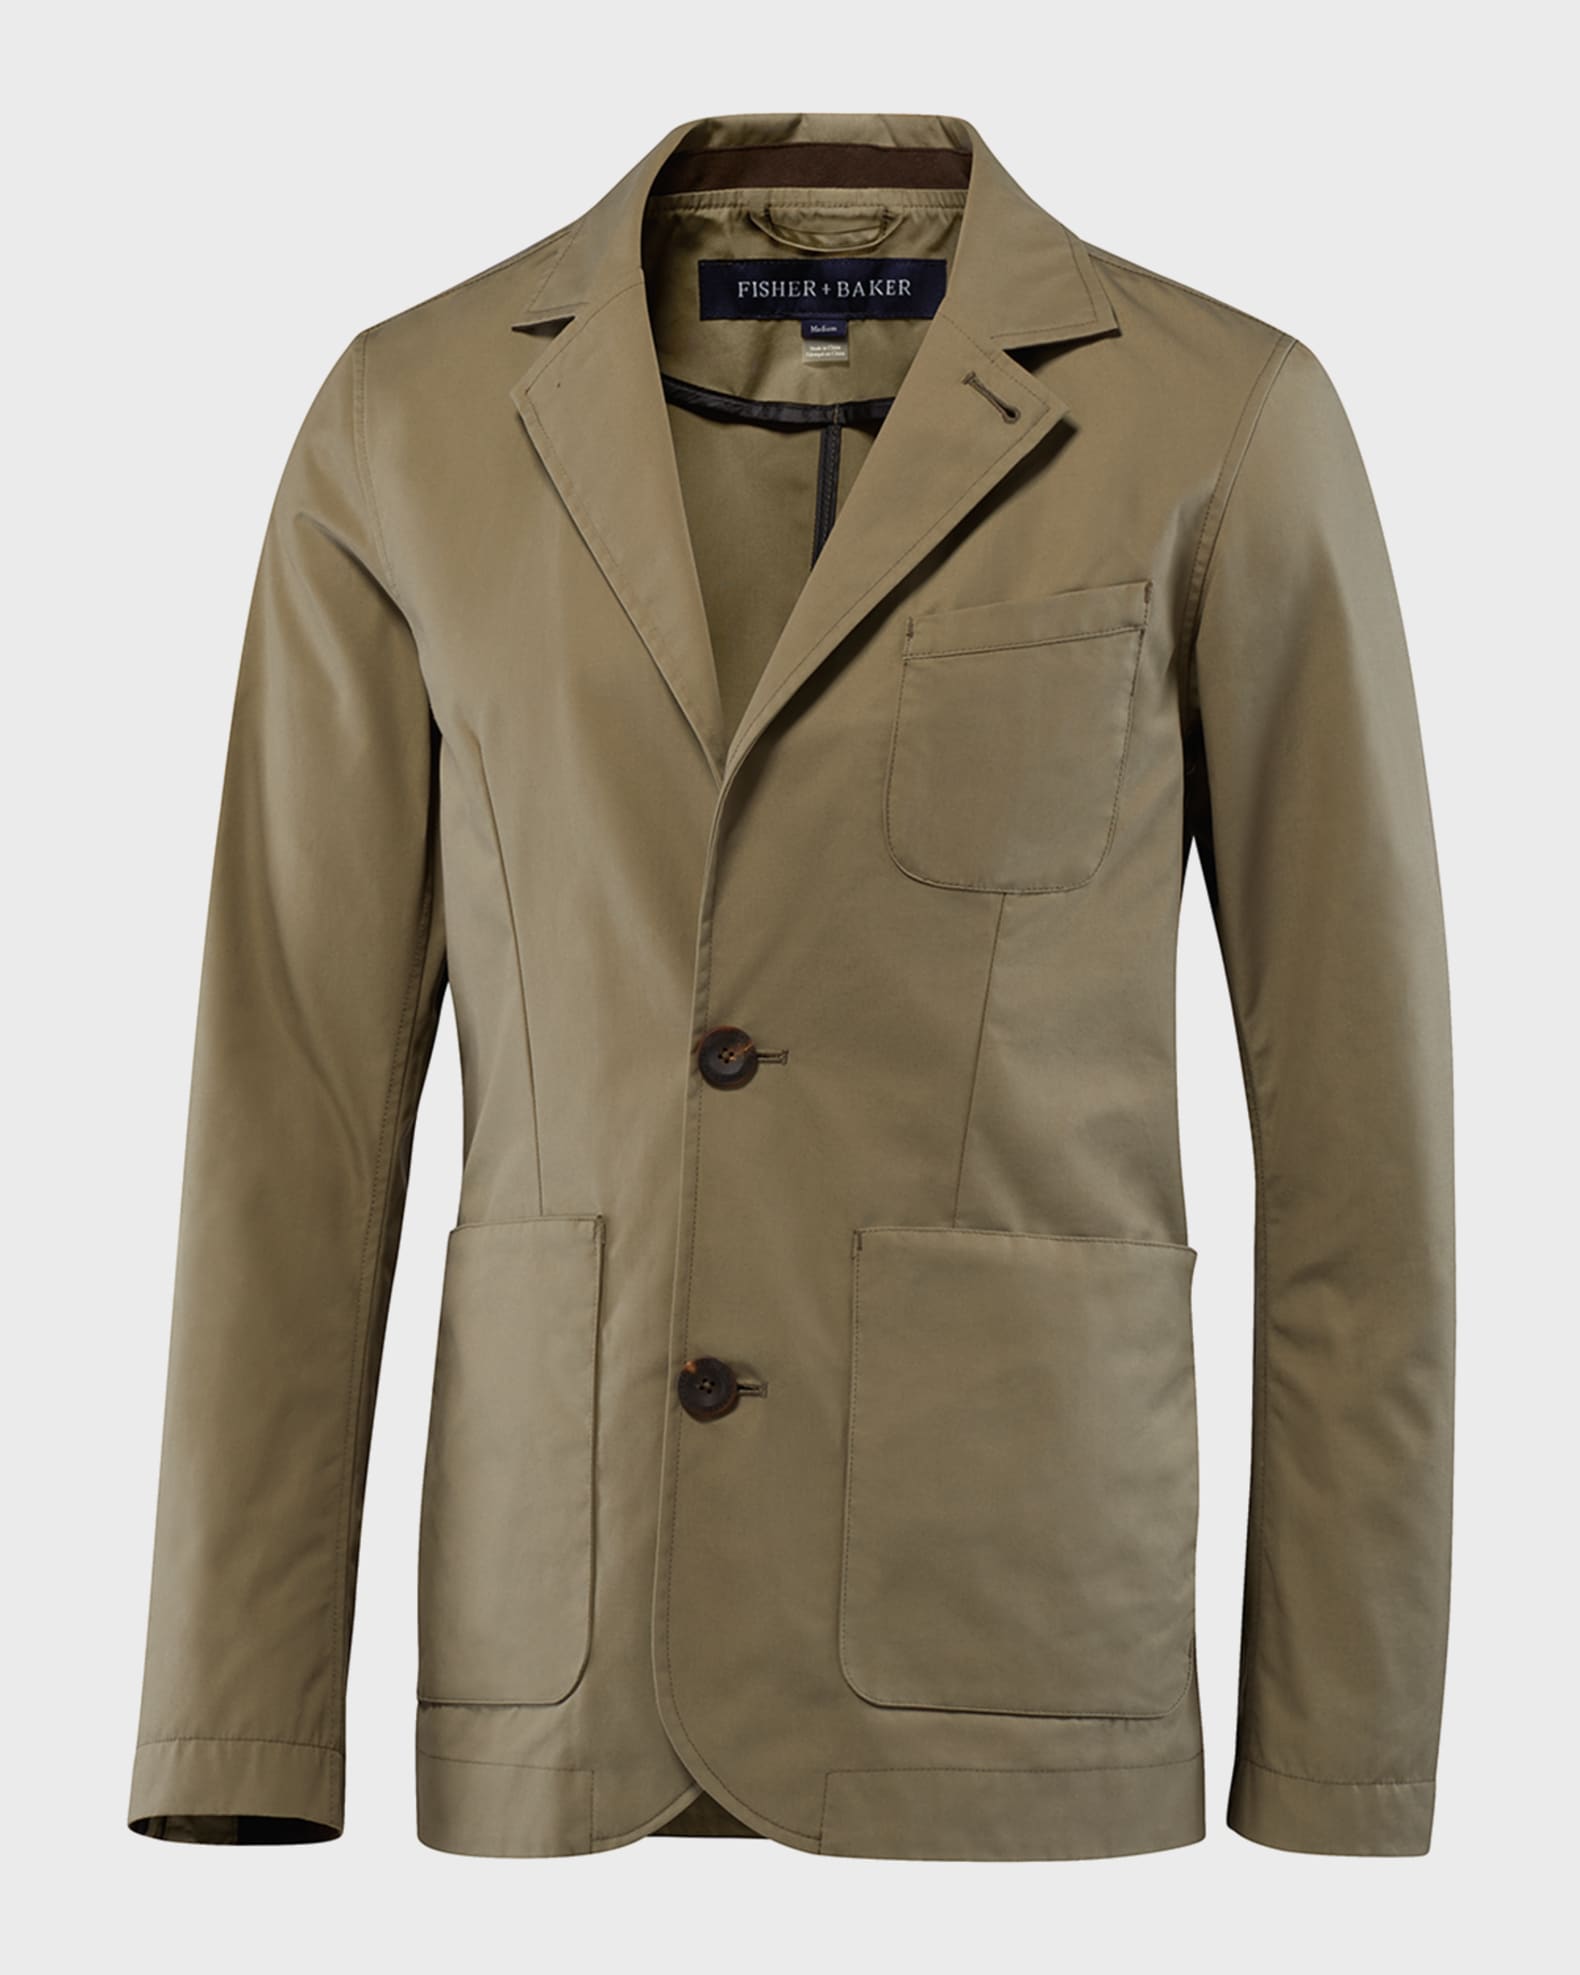 Fisher + Baker Men's Thompson Two-Button Jacket | Neiman Marcus